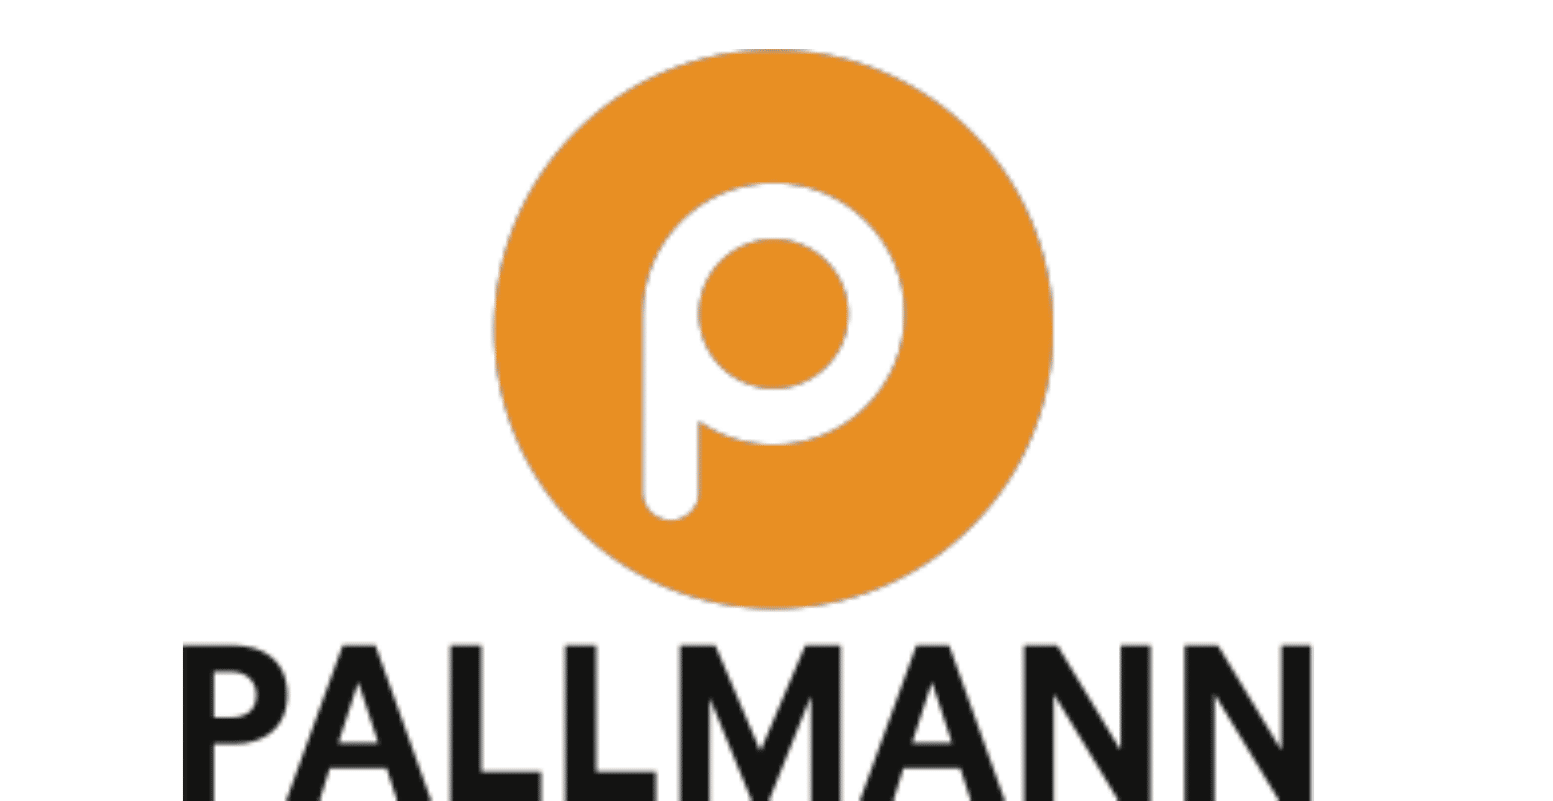 Pallmann logo